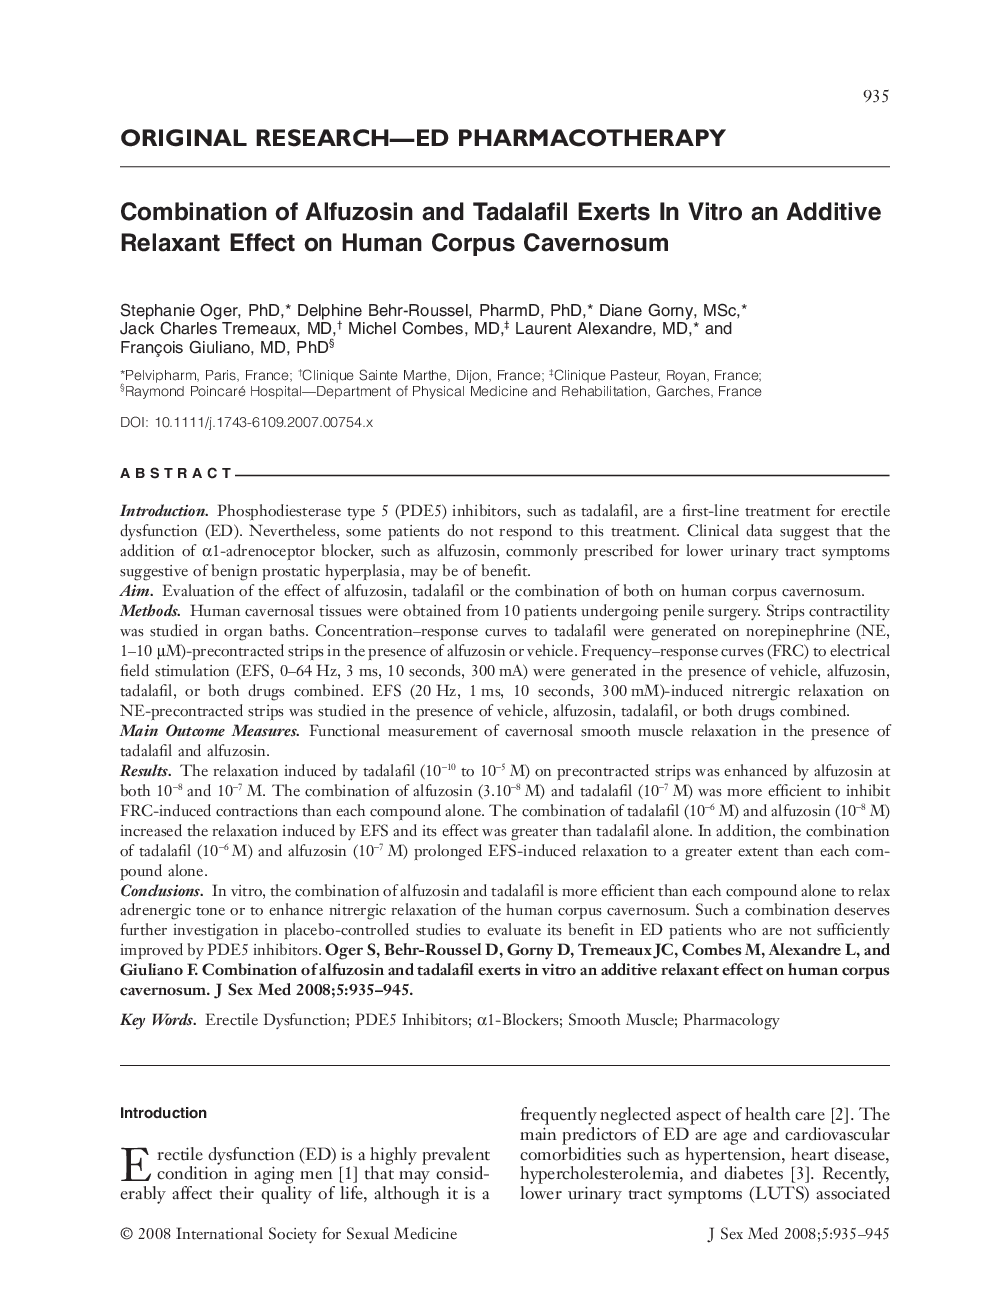 Combination of Alfuzosin and Tadalafil Exerts In Vitro an Additive Relaxant Effect on Human Corpus Cavernosum